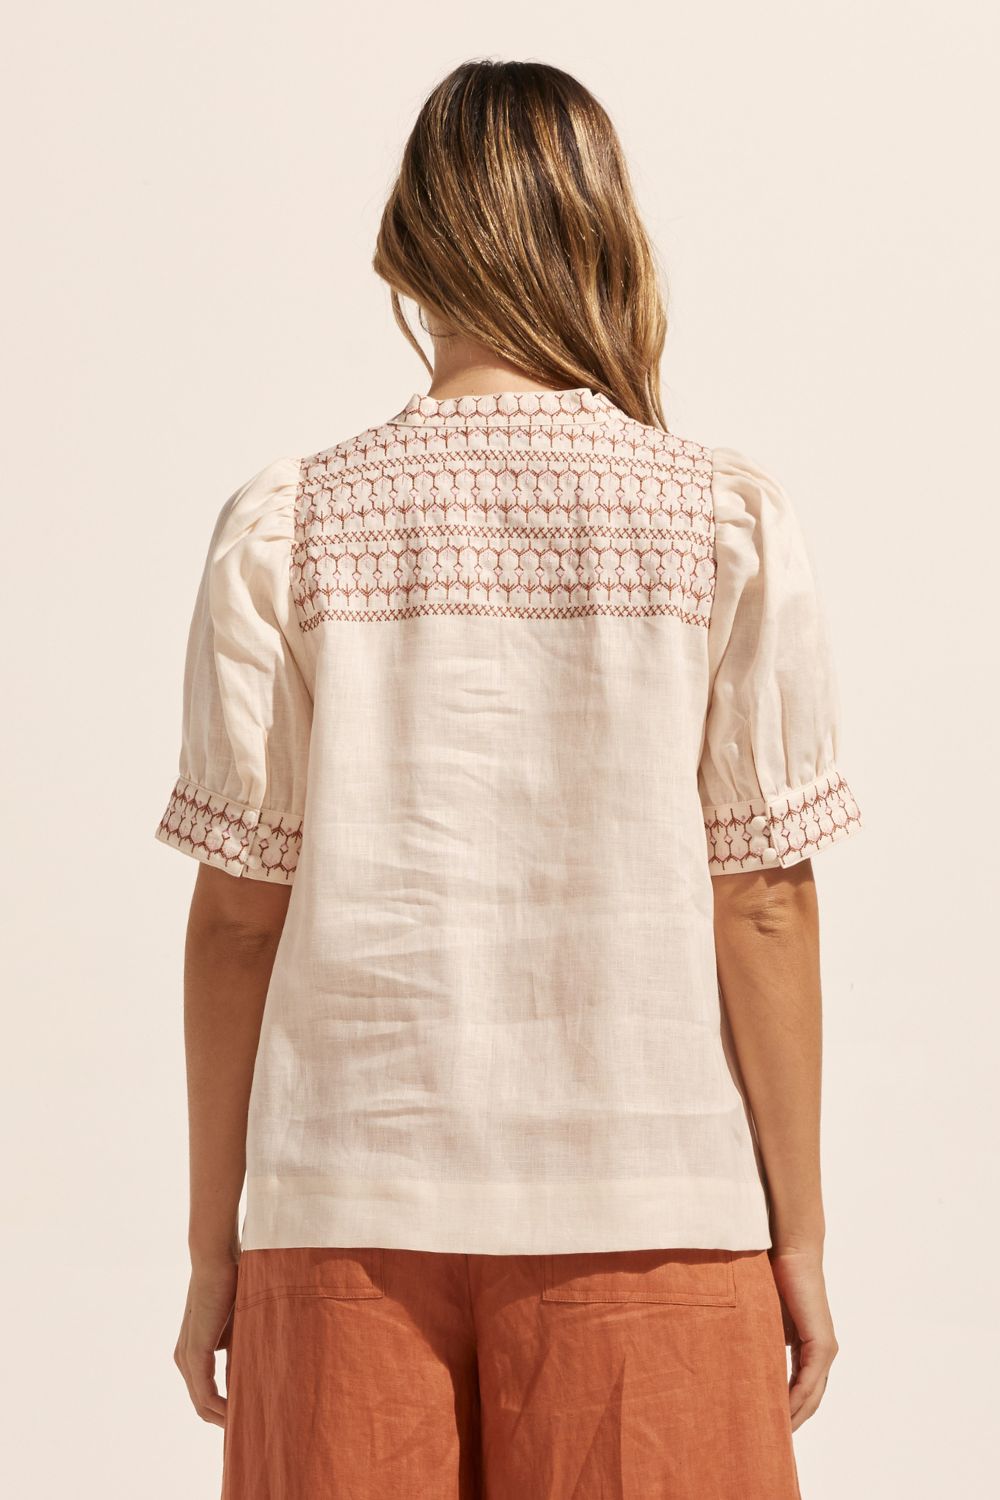 cream, embroidery, mid length sleeve, round neckline, deep v centre, top, back image